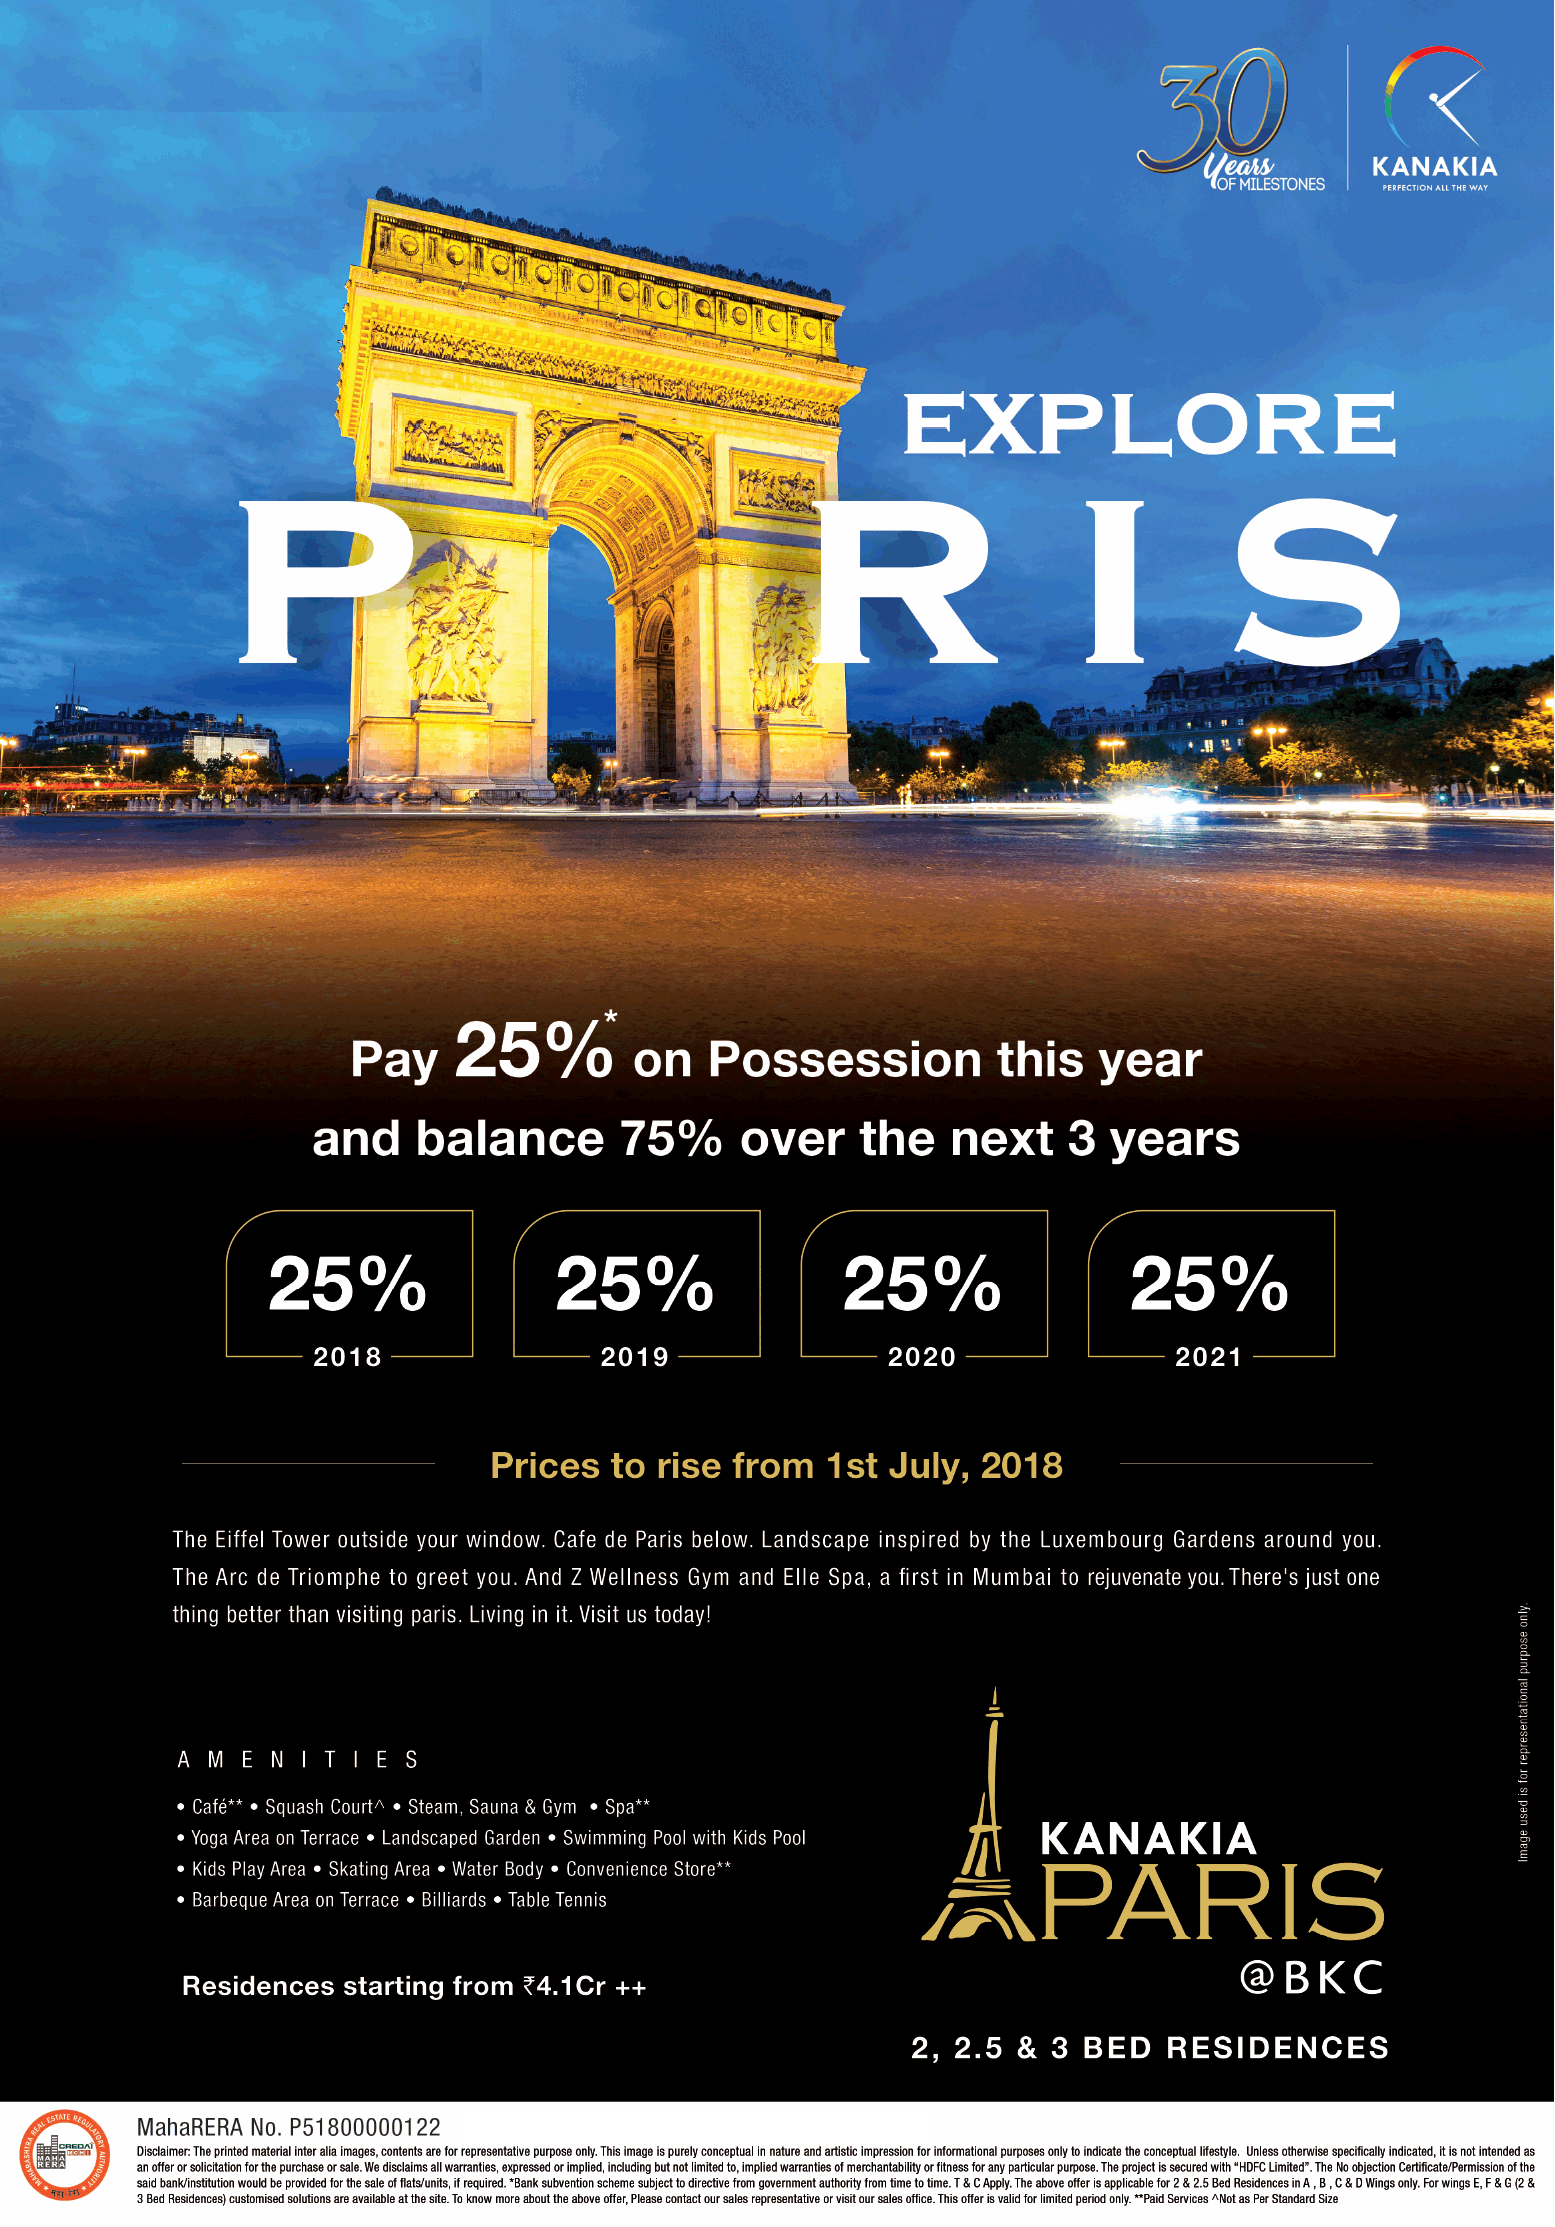 Pay 25% on Possession this year & balance 75% over the next 3 years at Kanakia Paris in Mumbai